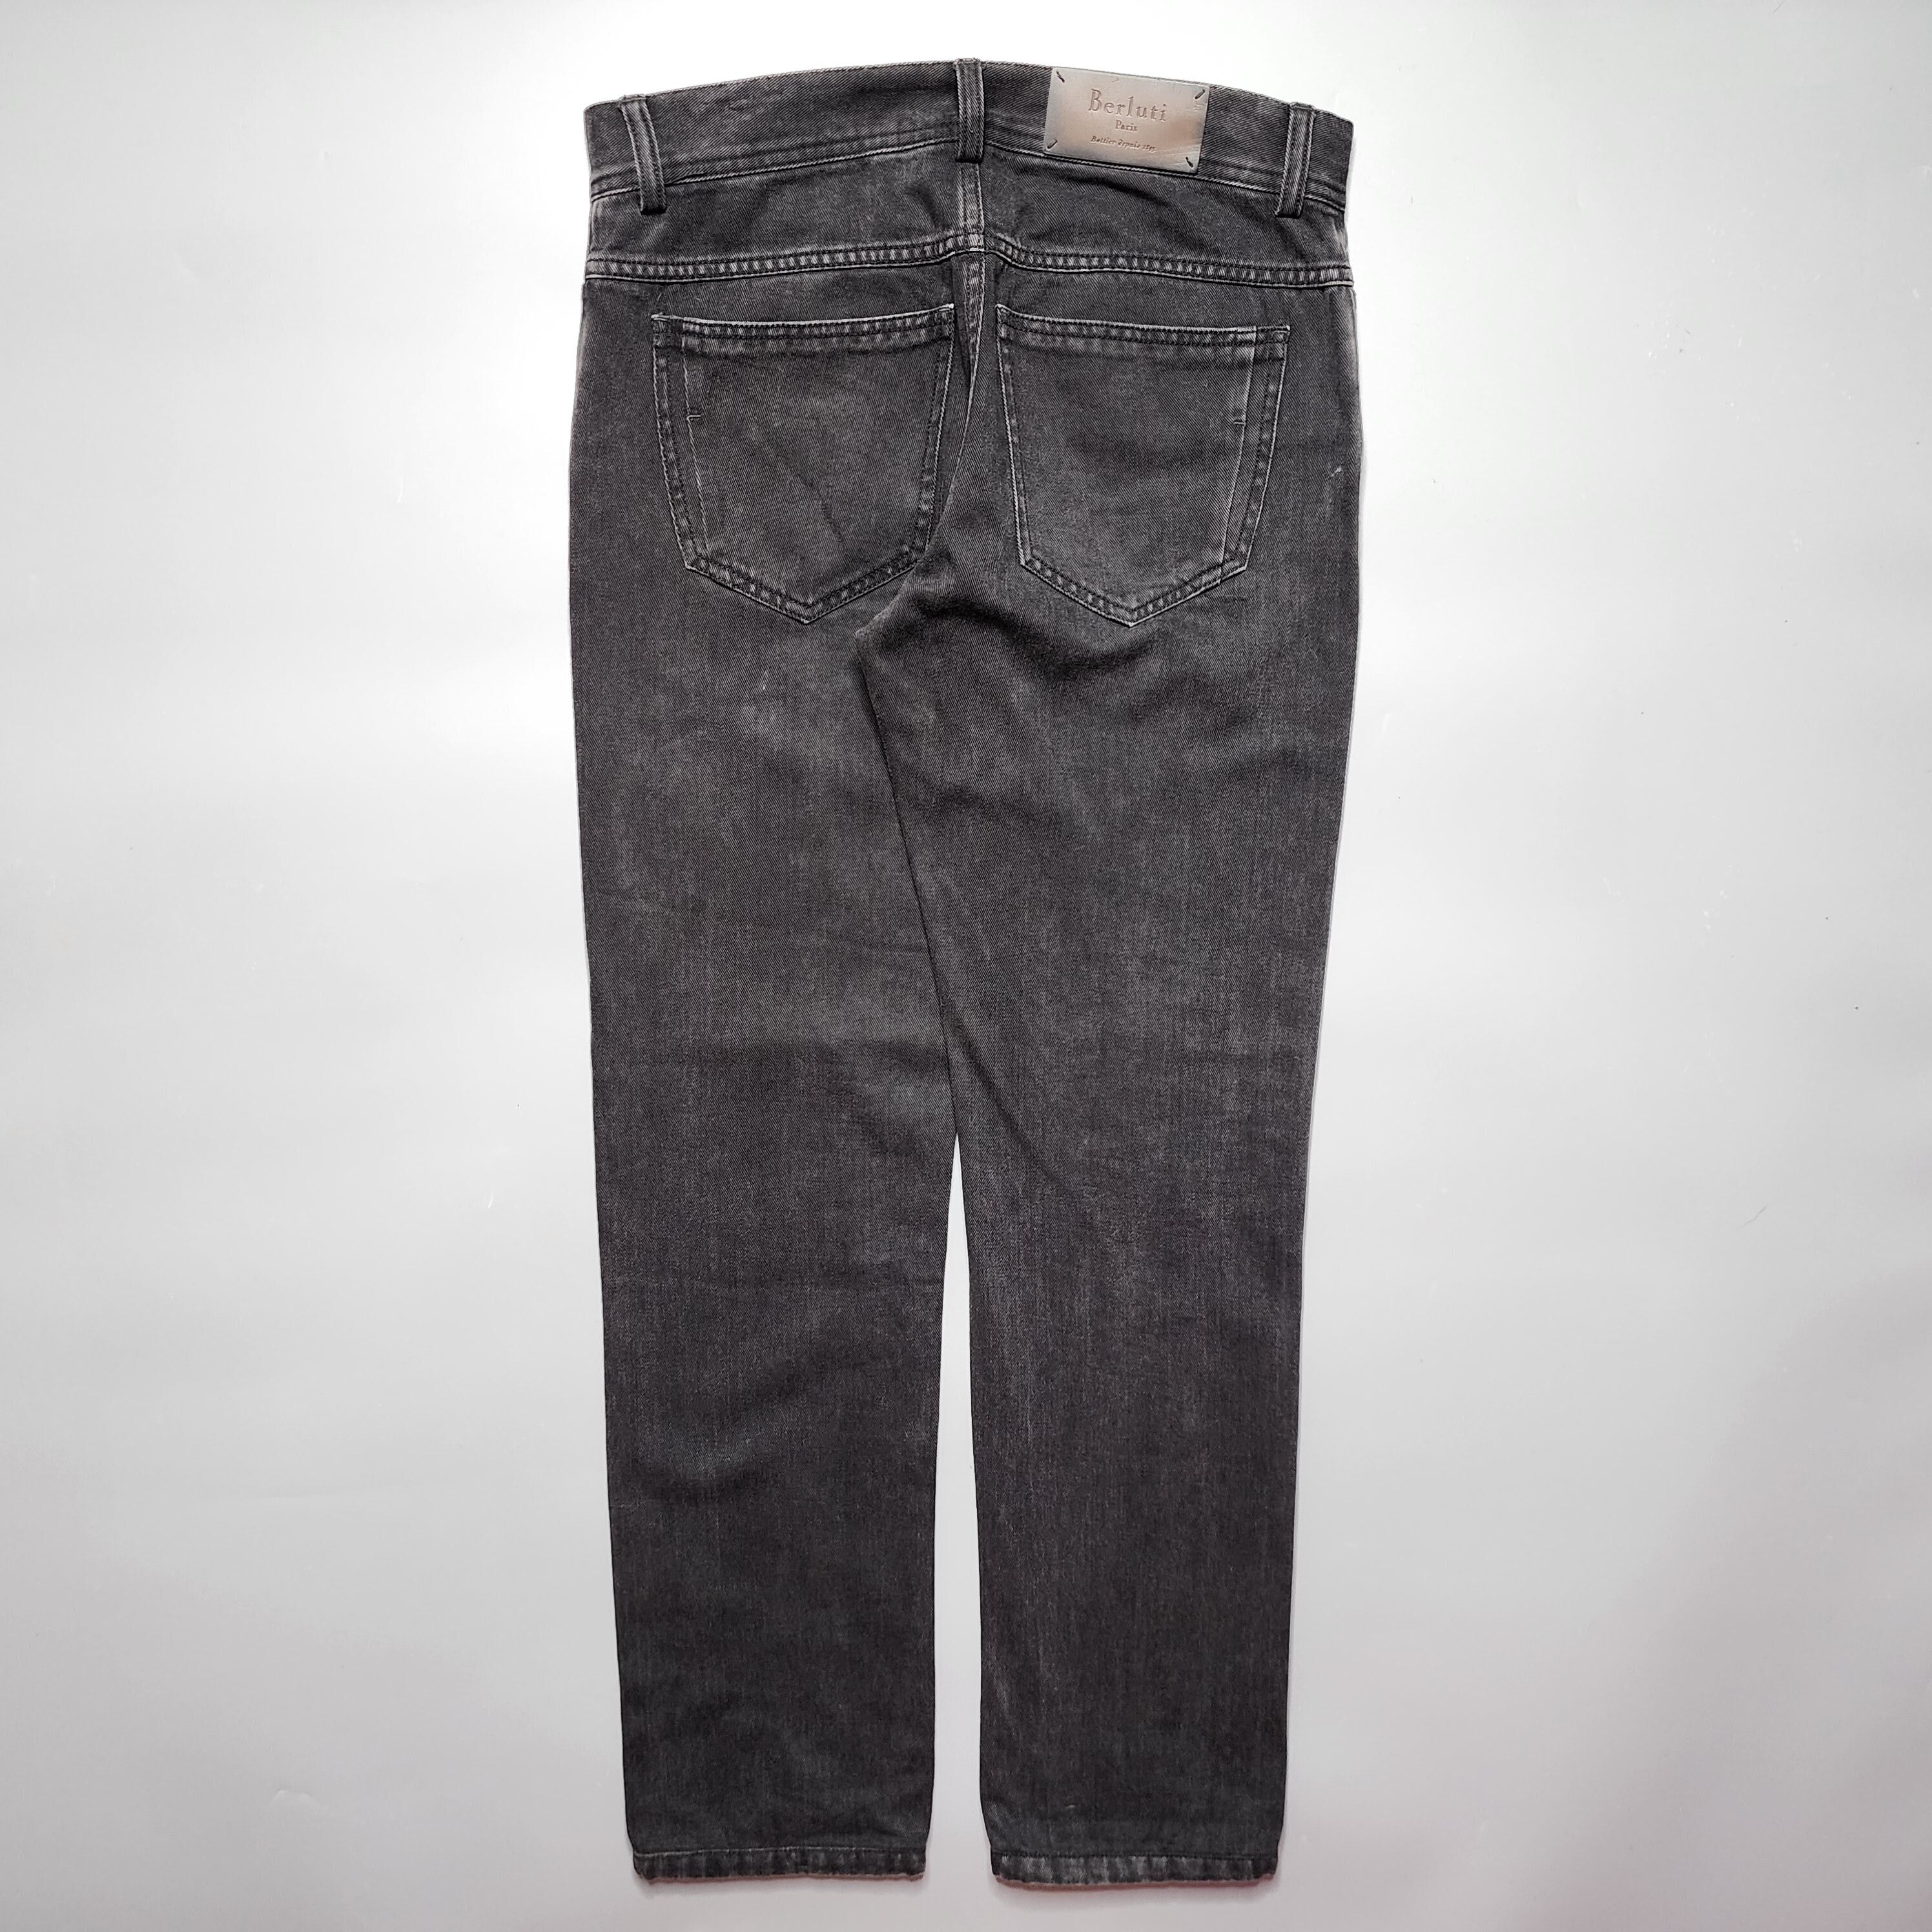 Berluti - Black Washed Jeans - 2